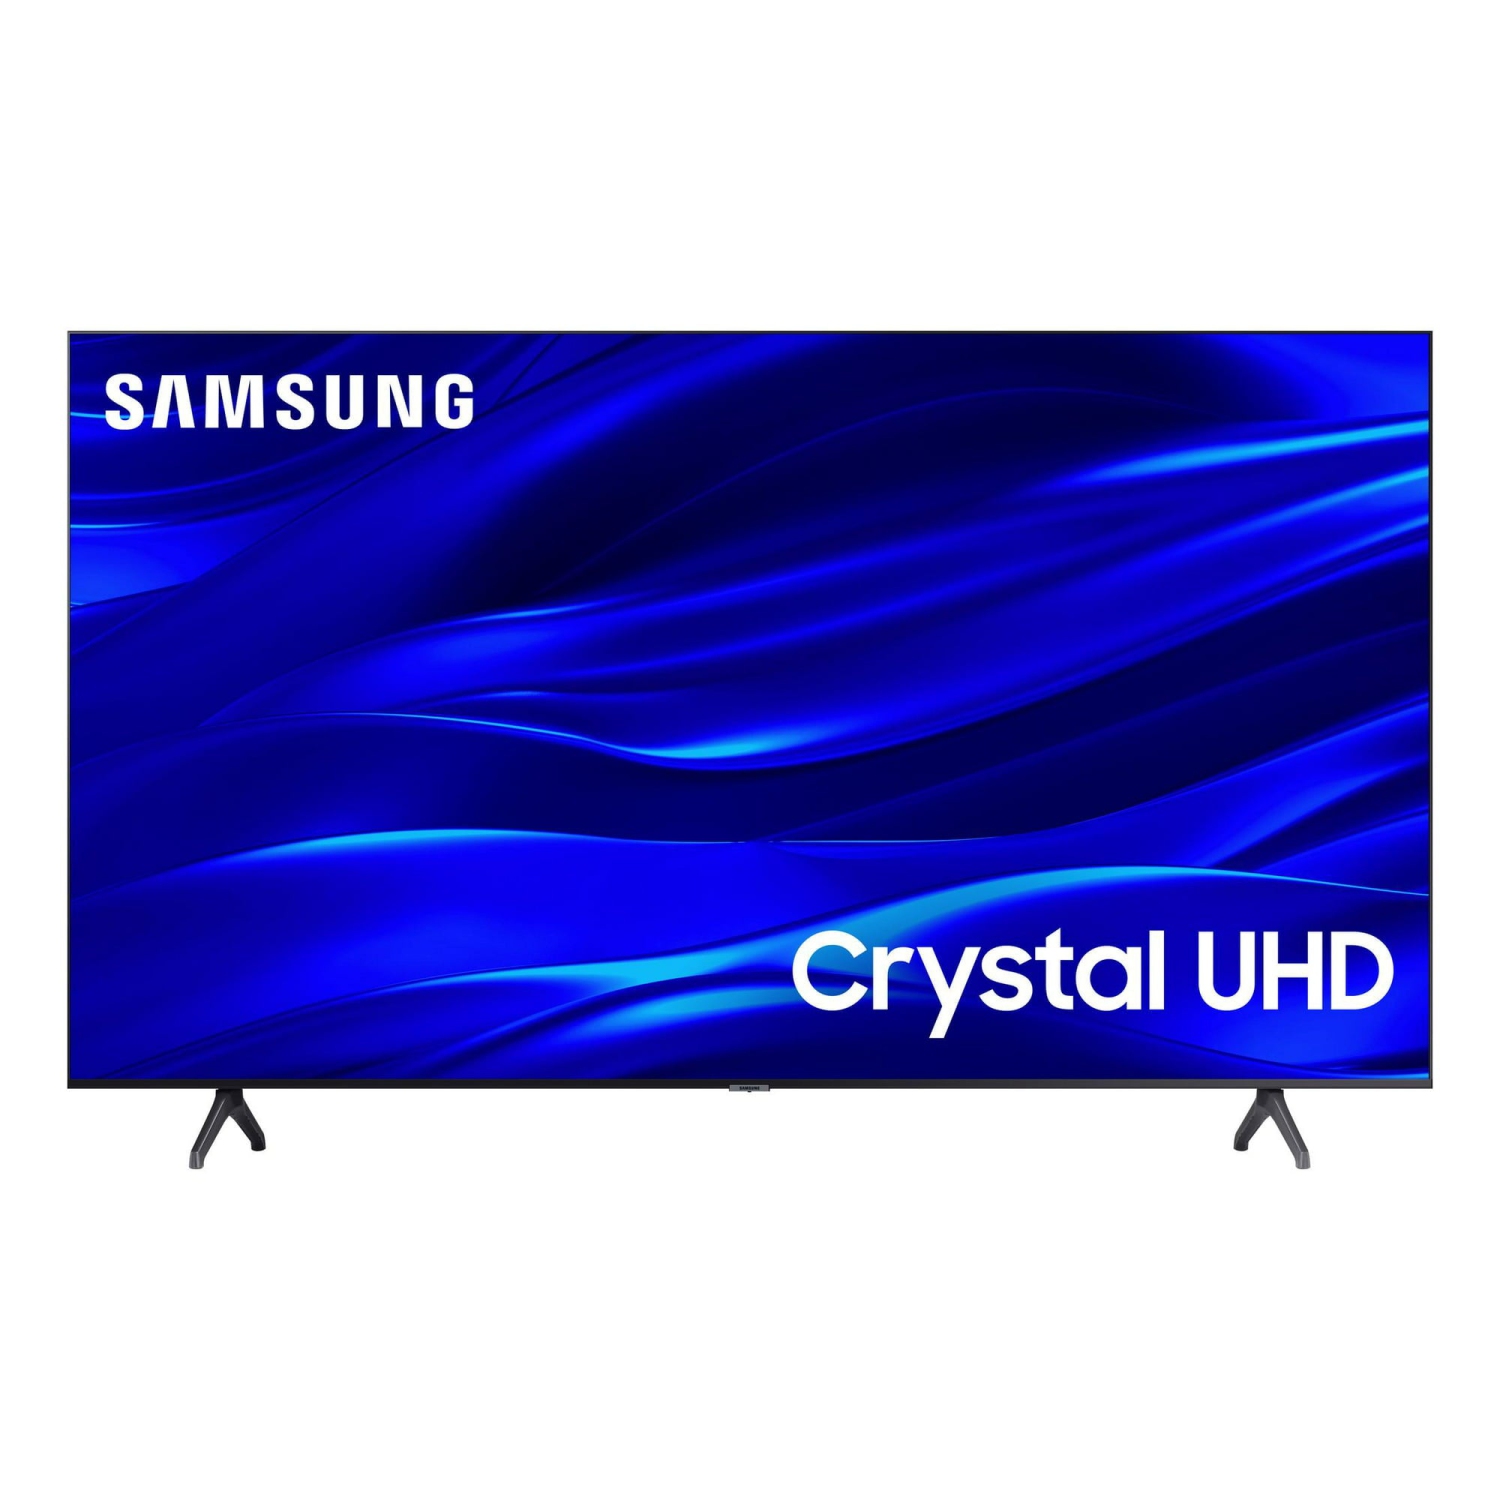 REFURBISHED (GOOD) - SAMSUNG 50" Class TU690T Crystal UHD 4K Smart TV powered by Tizen (UN50TU690T)